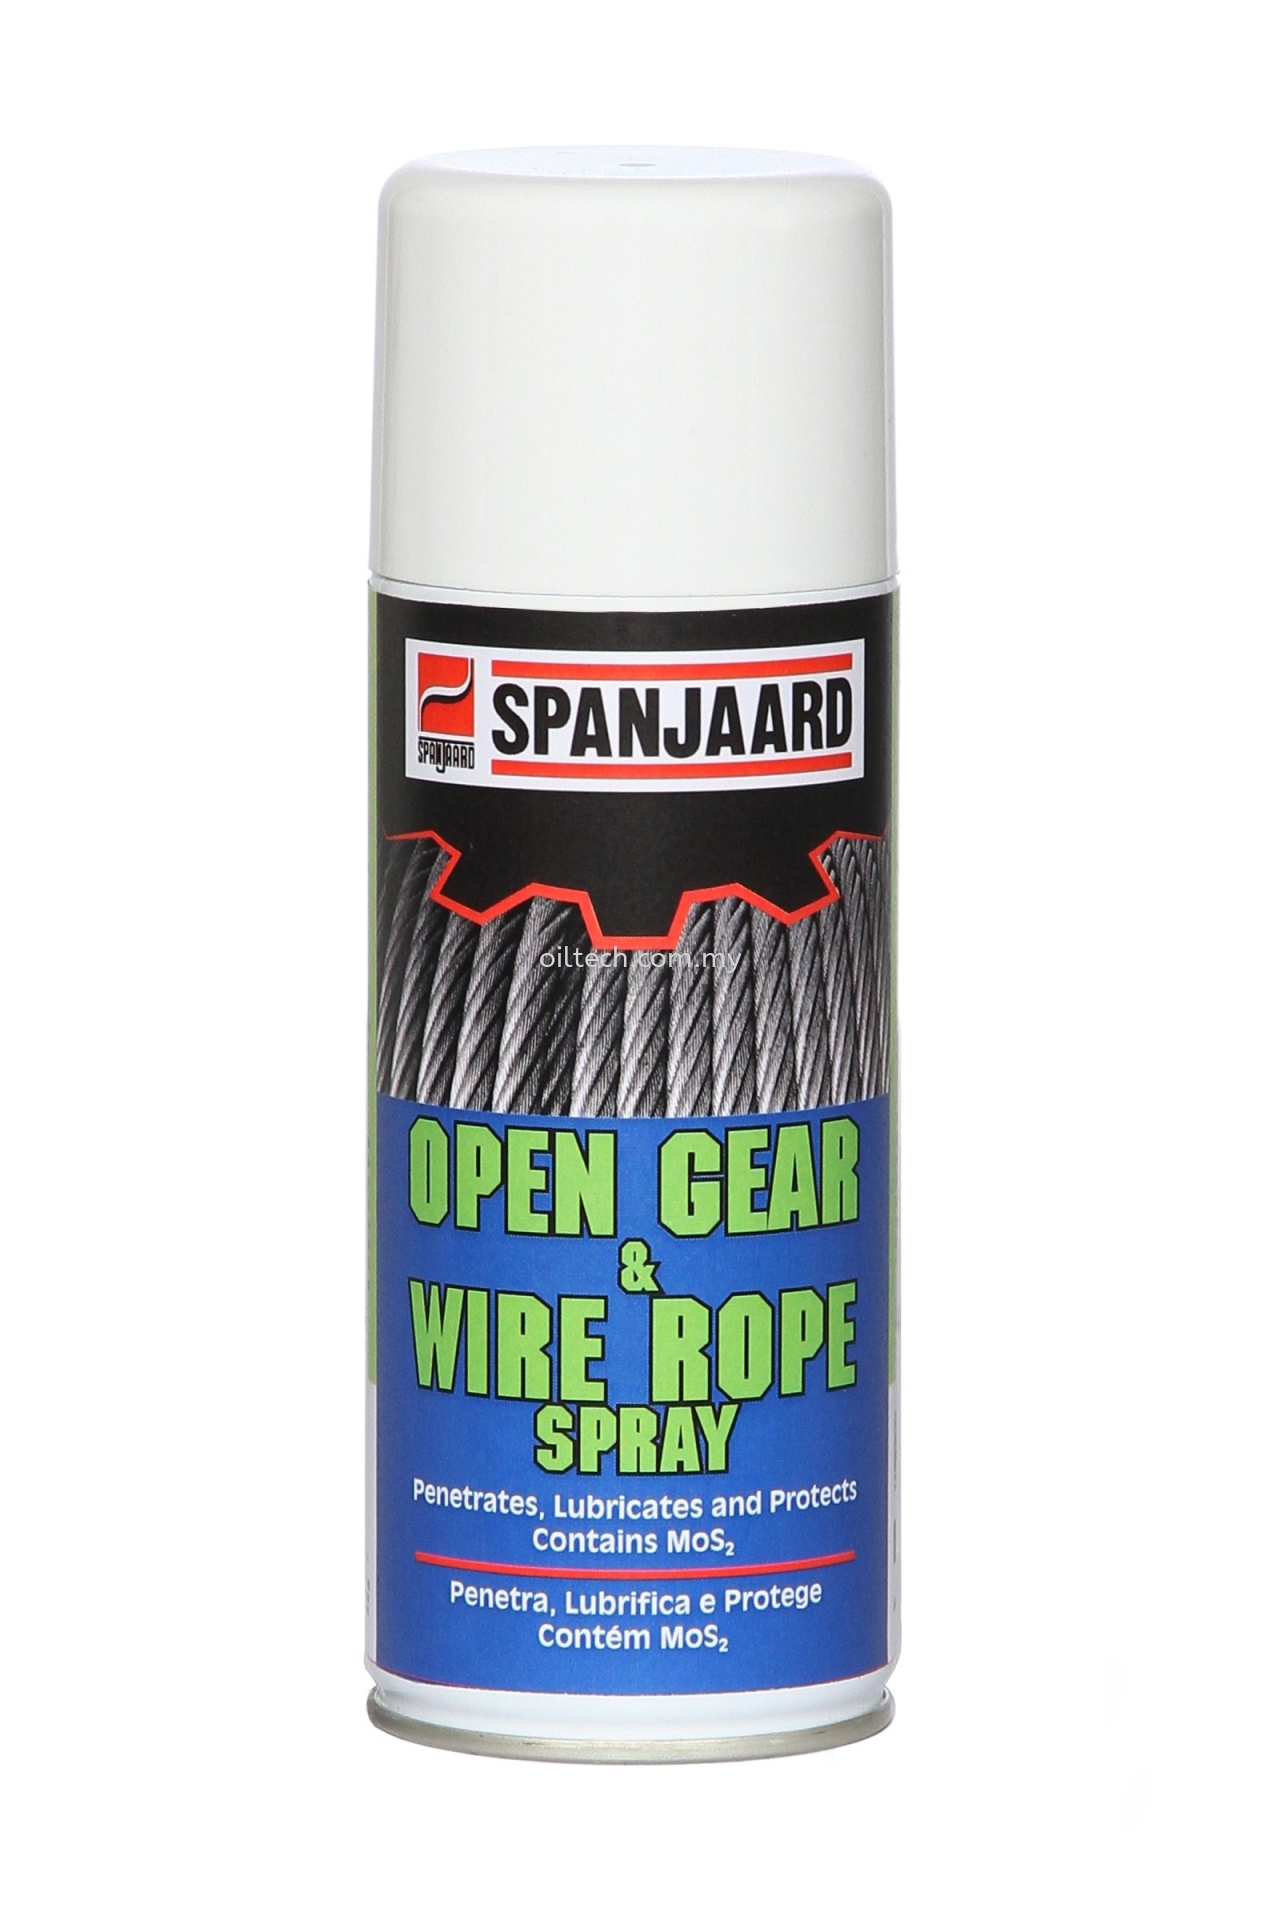 Open Gear Spray - Spanjaard Malaysia